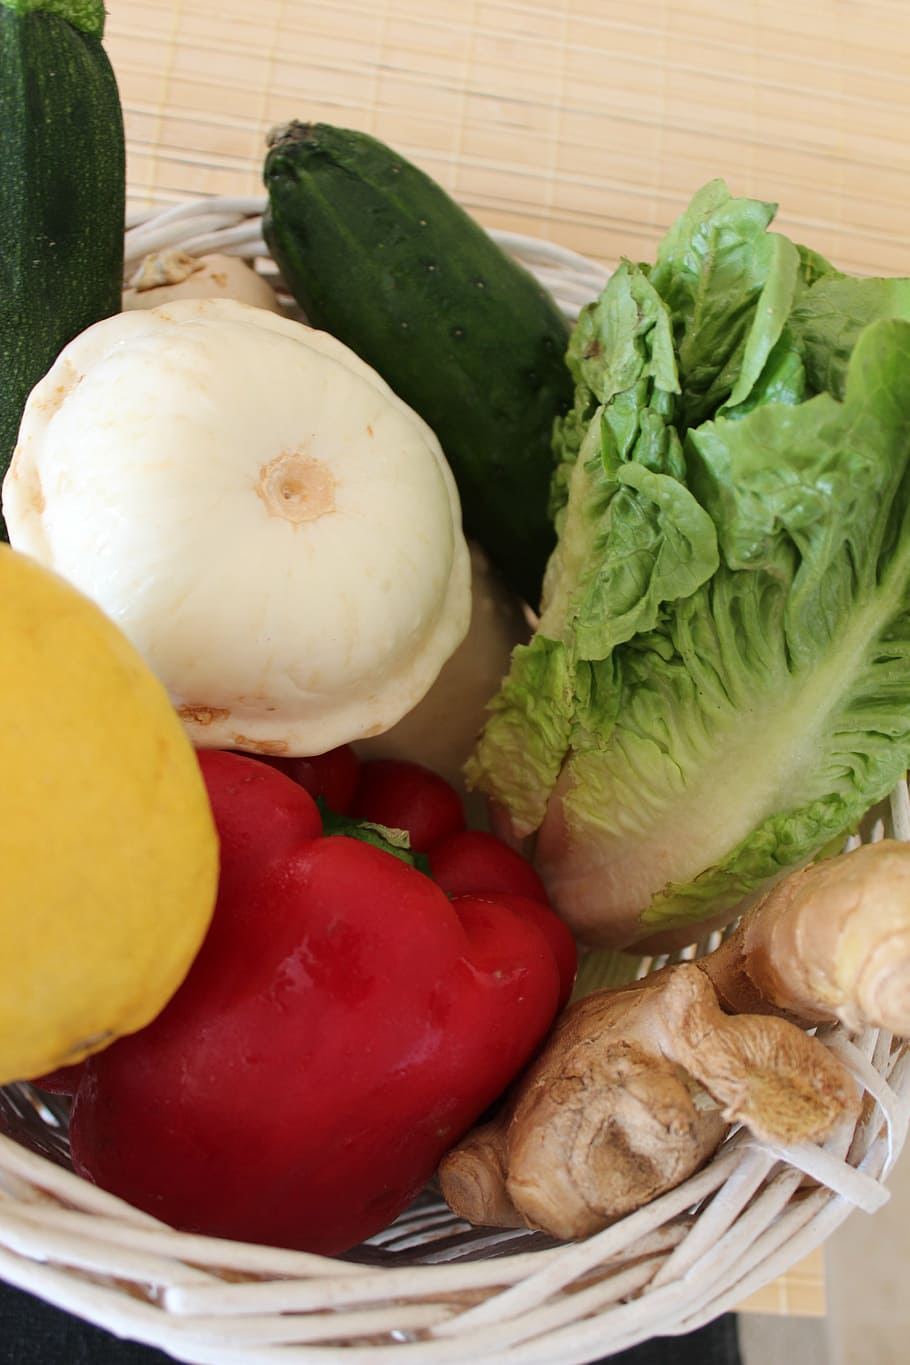 legumes, saudável, comida, dieta, comida saudável, fresco, verde, dieta saudável, legumes frescos, alimentação saudável